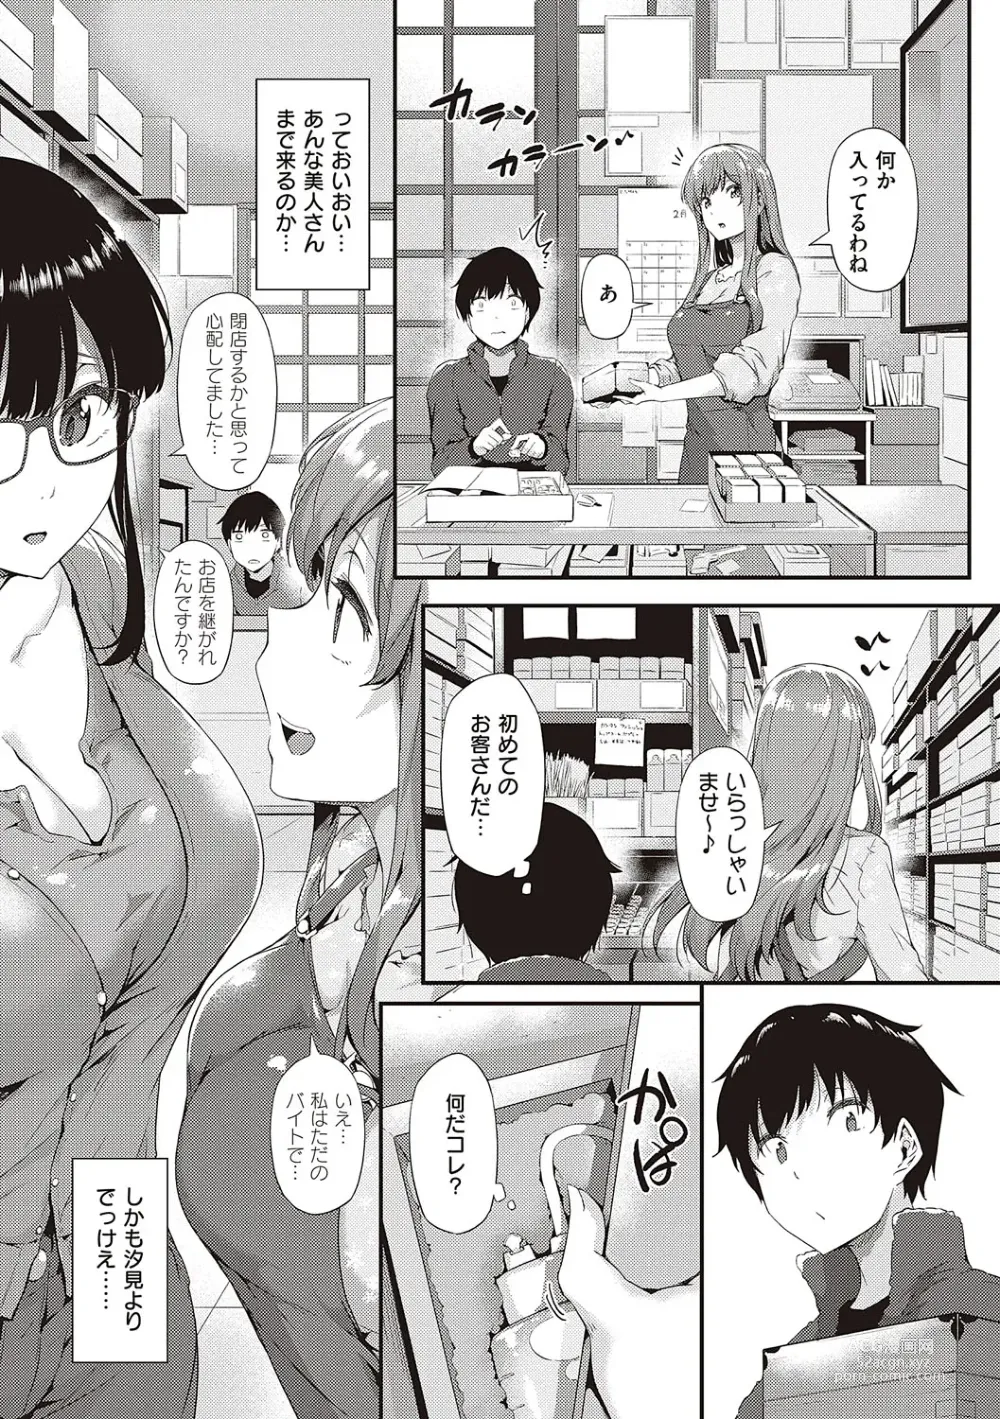 Page 18 of manga Shiranai Koto Shiritai no? - Dont you wanna learn something new?